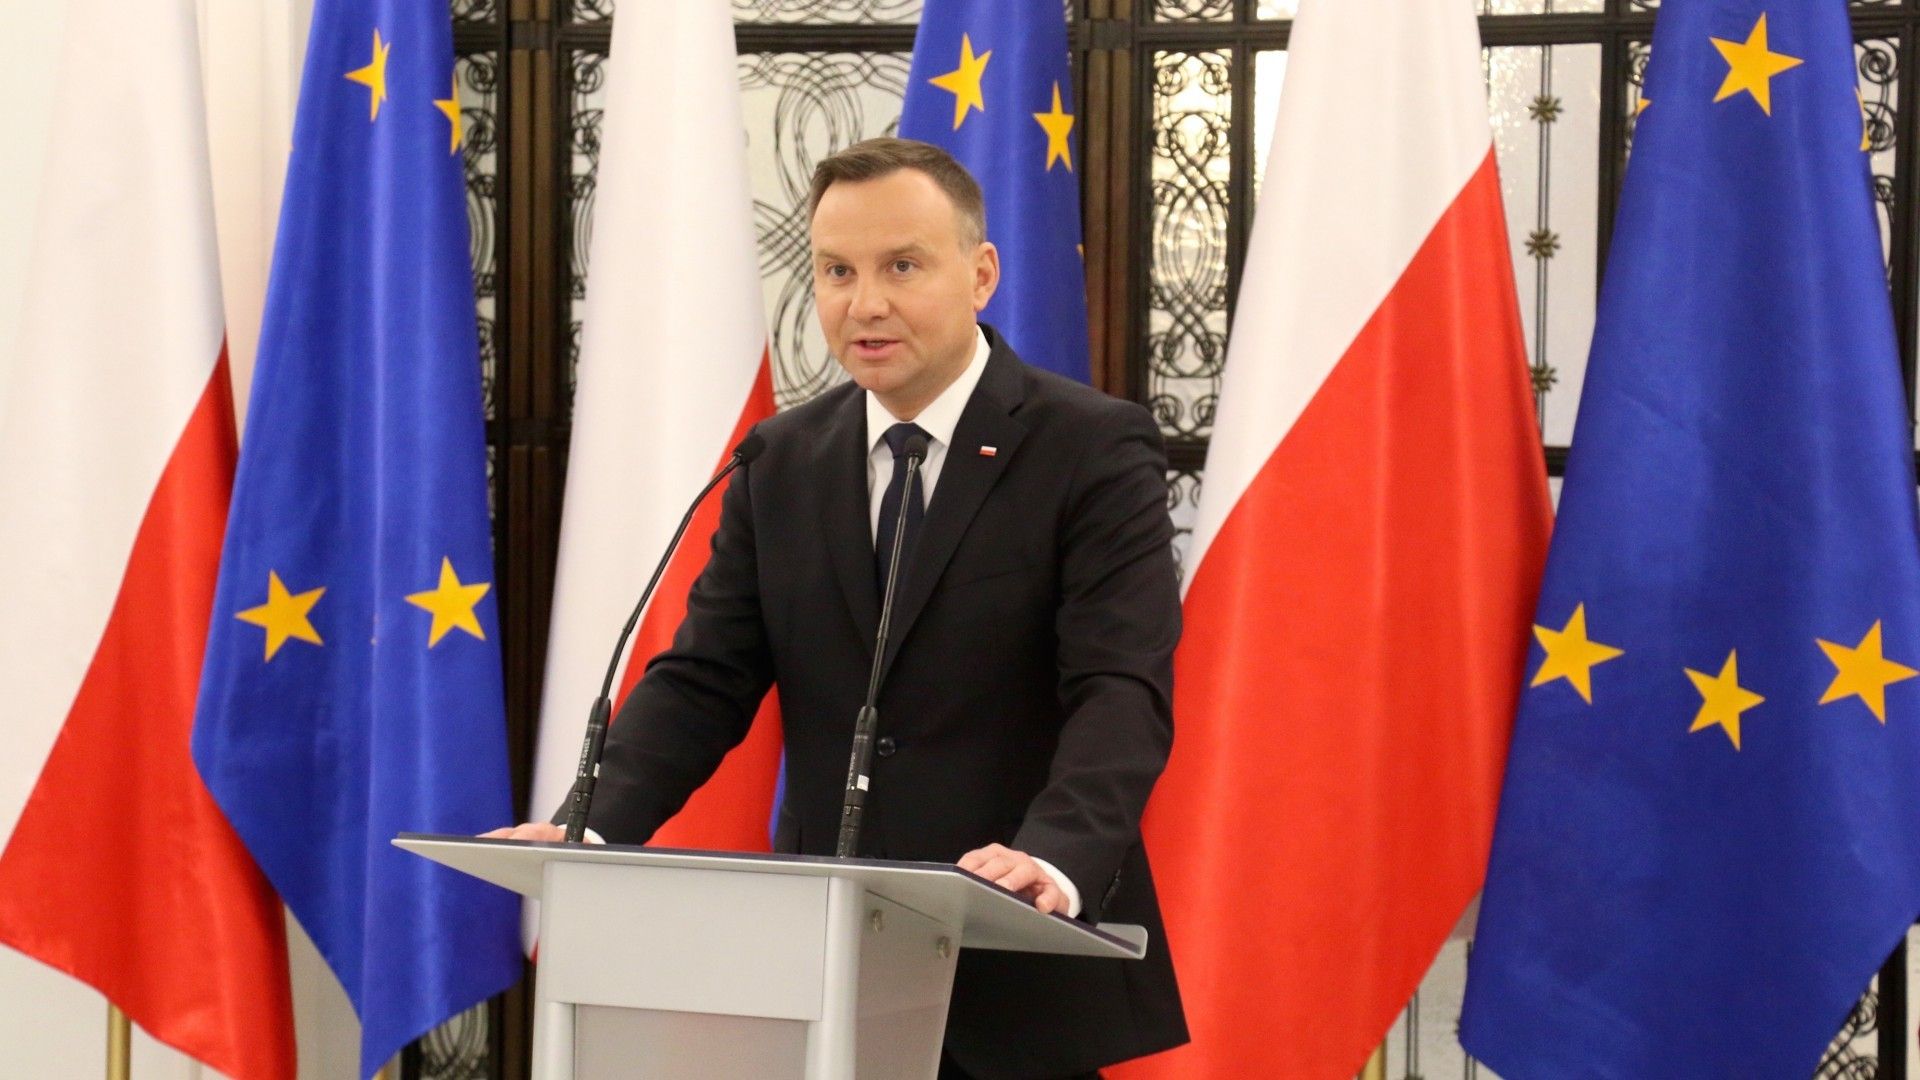 Prezydent Andrzej Duda. Fot. Rafał Lesiecki / Defence24.pl